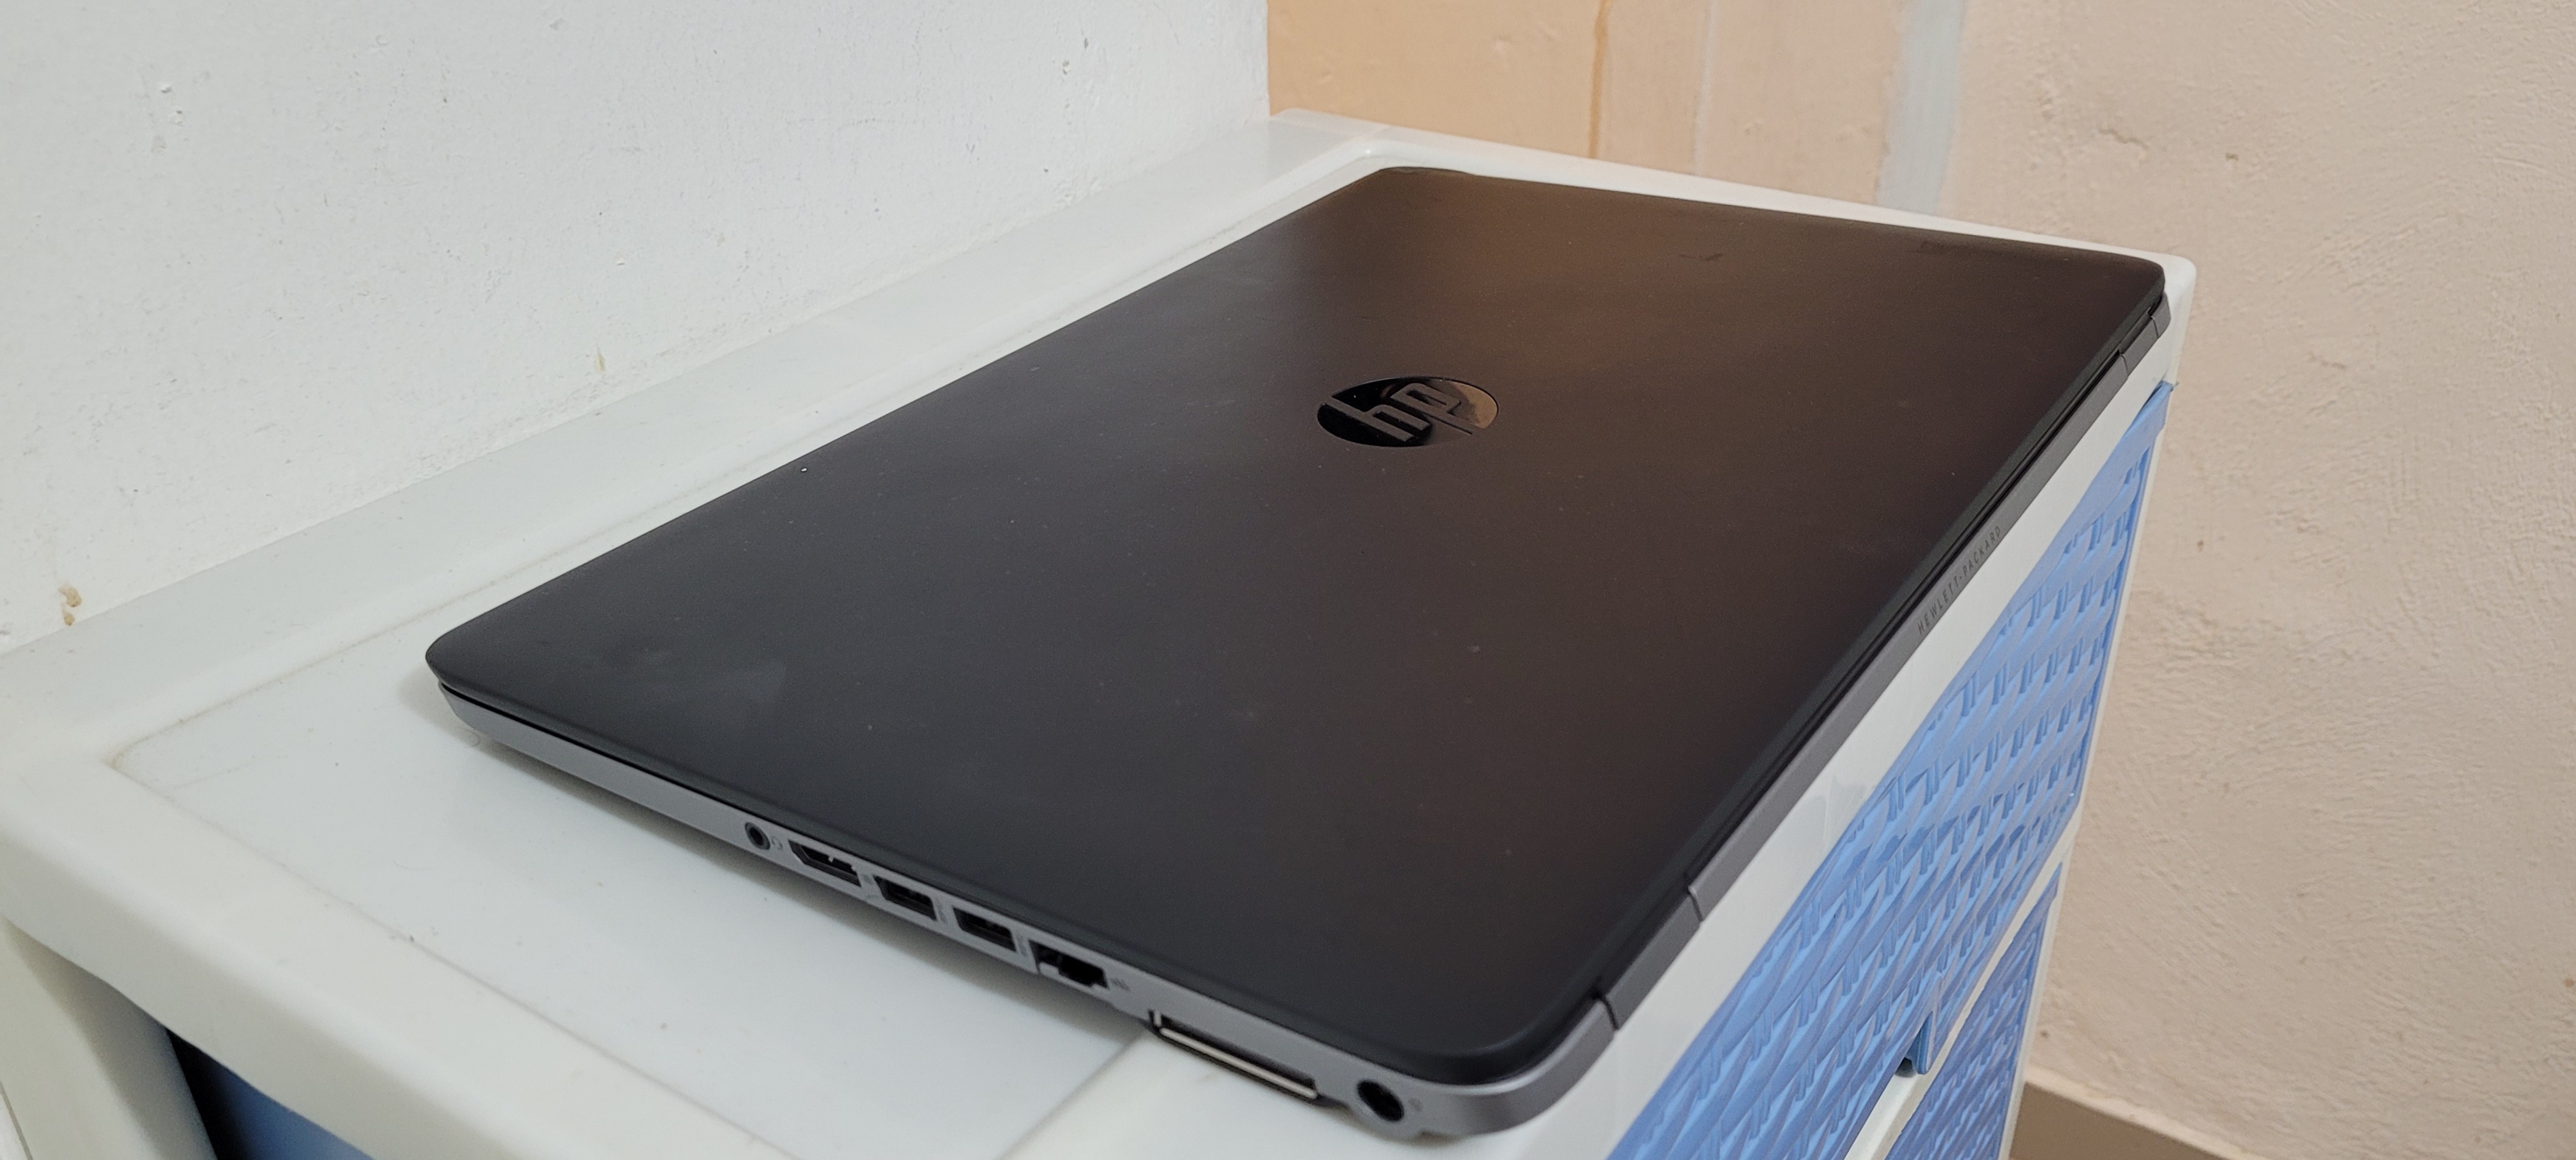 computadoras y laptops - laptop hp Slim 17 Pulg Core i5 Ram 8gb Disco 512gb SSD Solido New 2